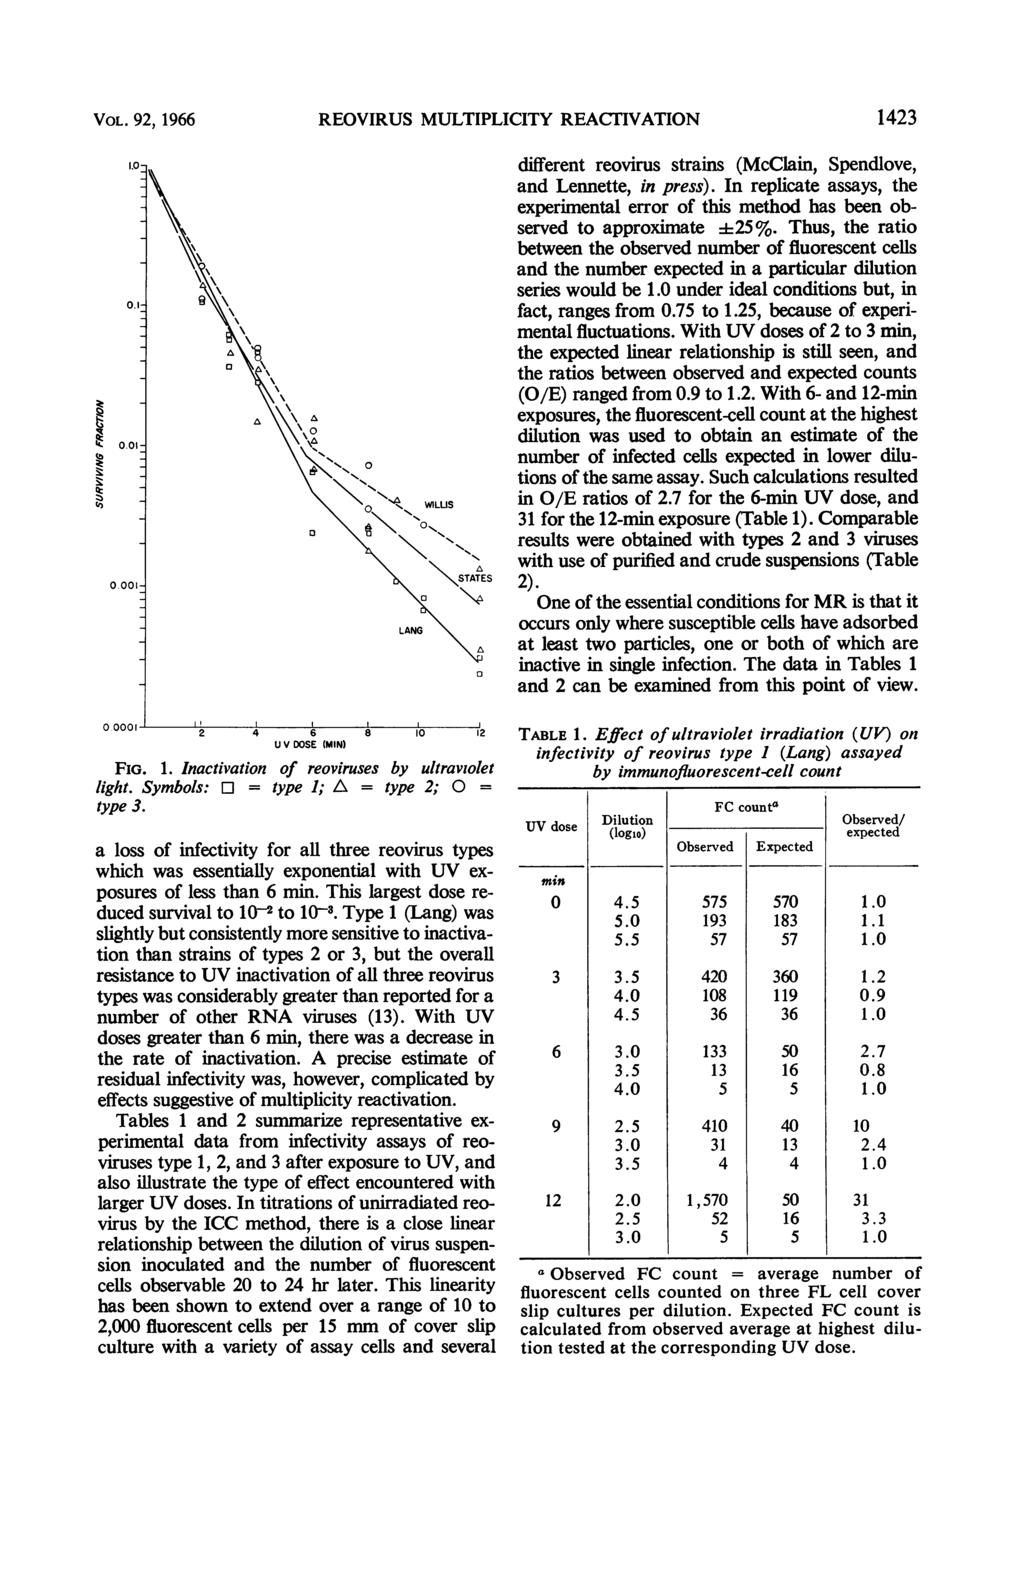 VOL. 92, 1966 REOVIRUS MULTIPLICITY REACTIVATION 1423 different reovirus strains (McClain, Spendlove, and Lennette, in press).